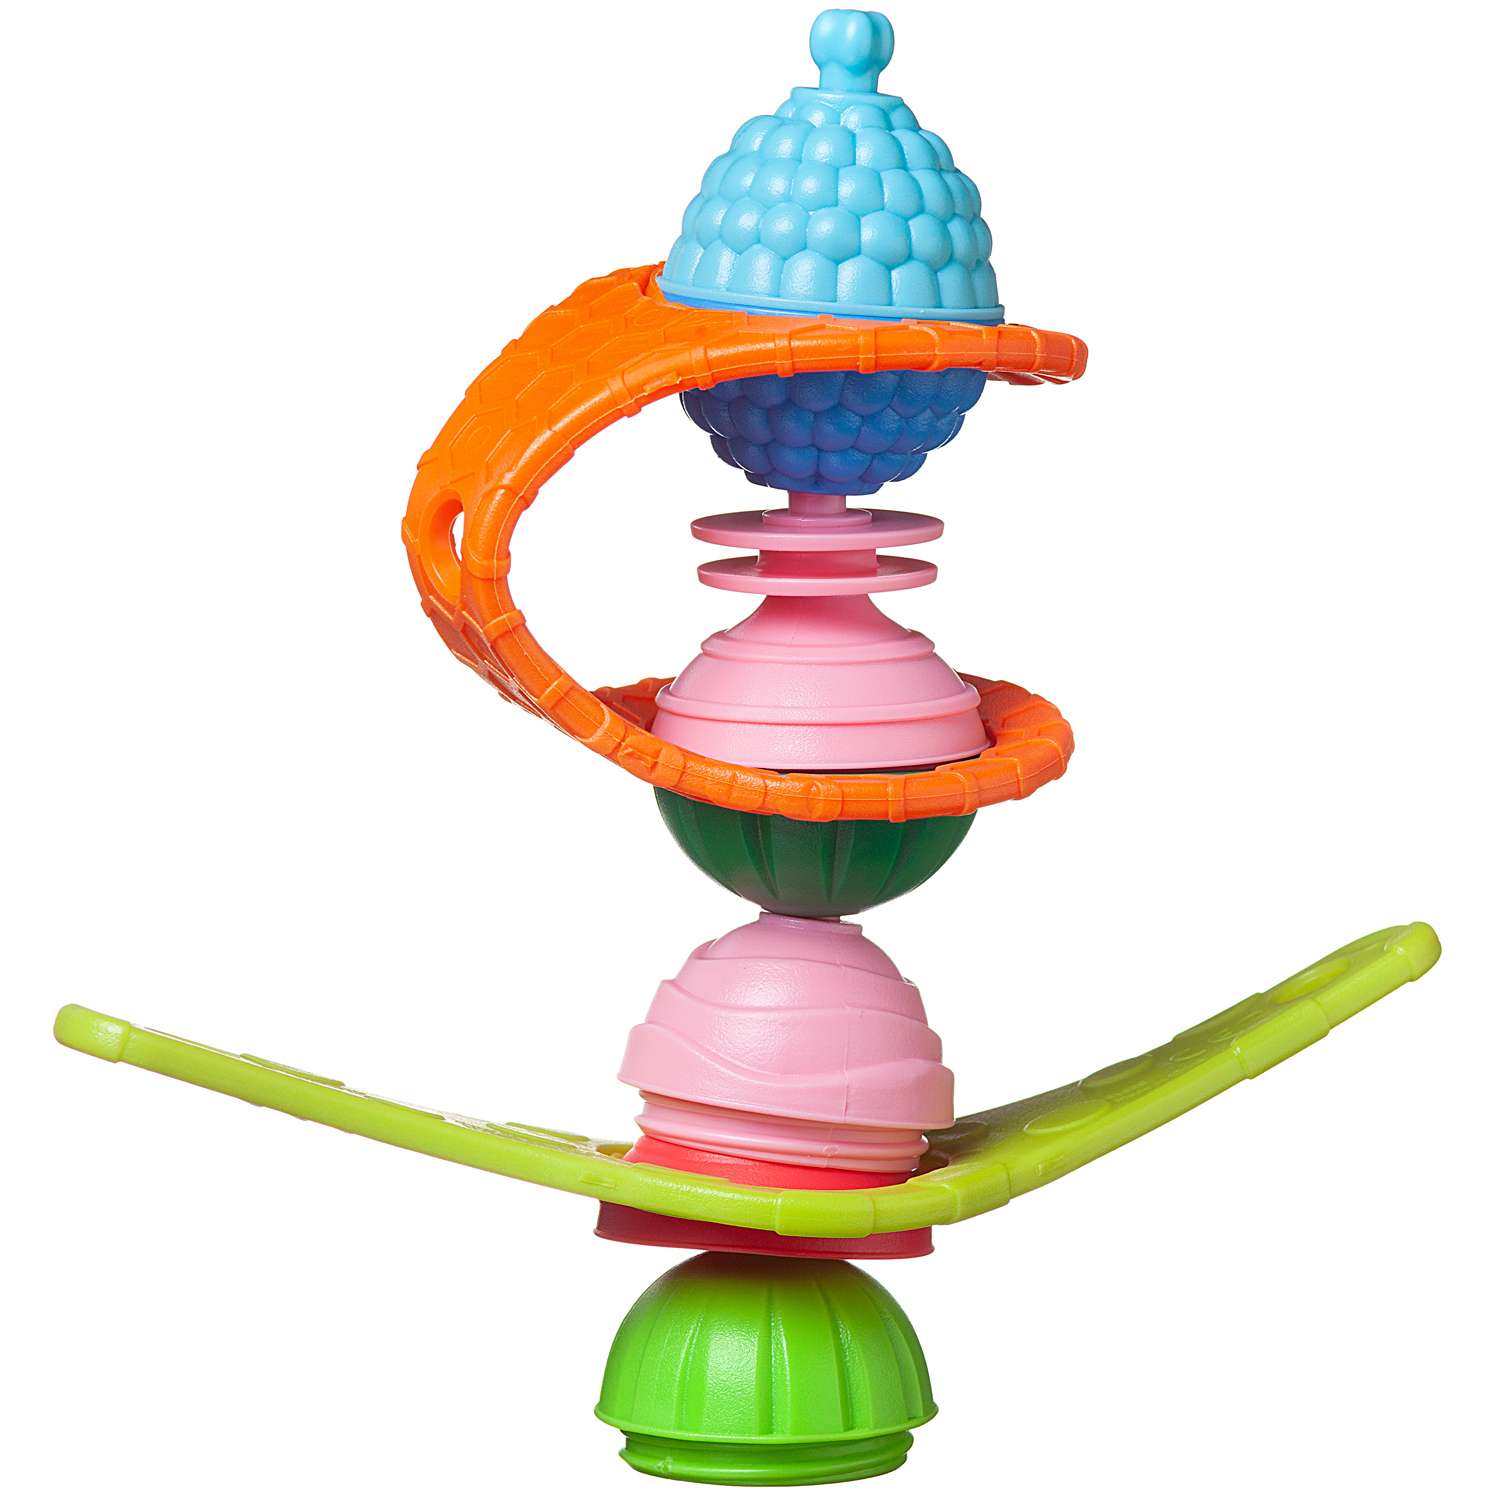 Развивающая игрушка LALABOOM Комплект соединителей 10 предметов - фото 1